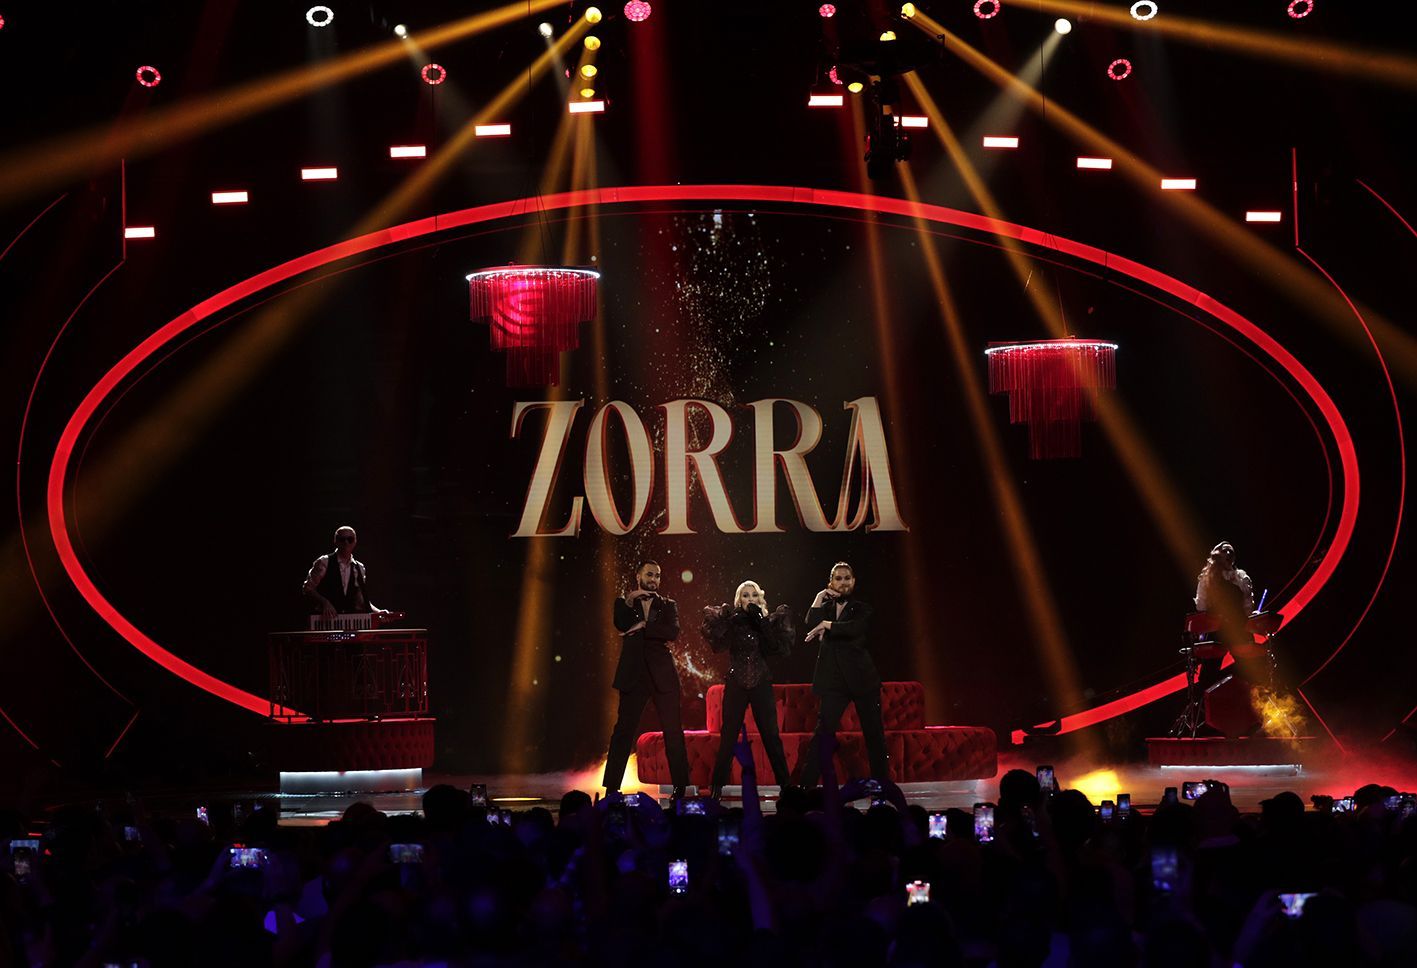 El 'Zorra' de Nebulossa reina en el Benidorm Fest